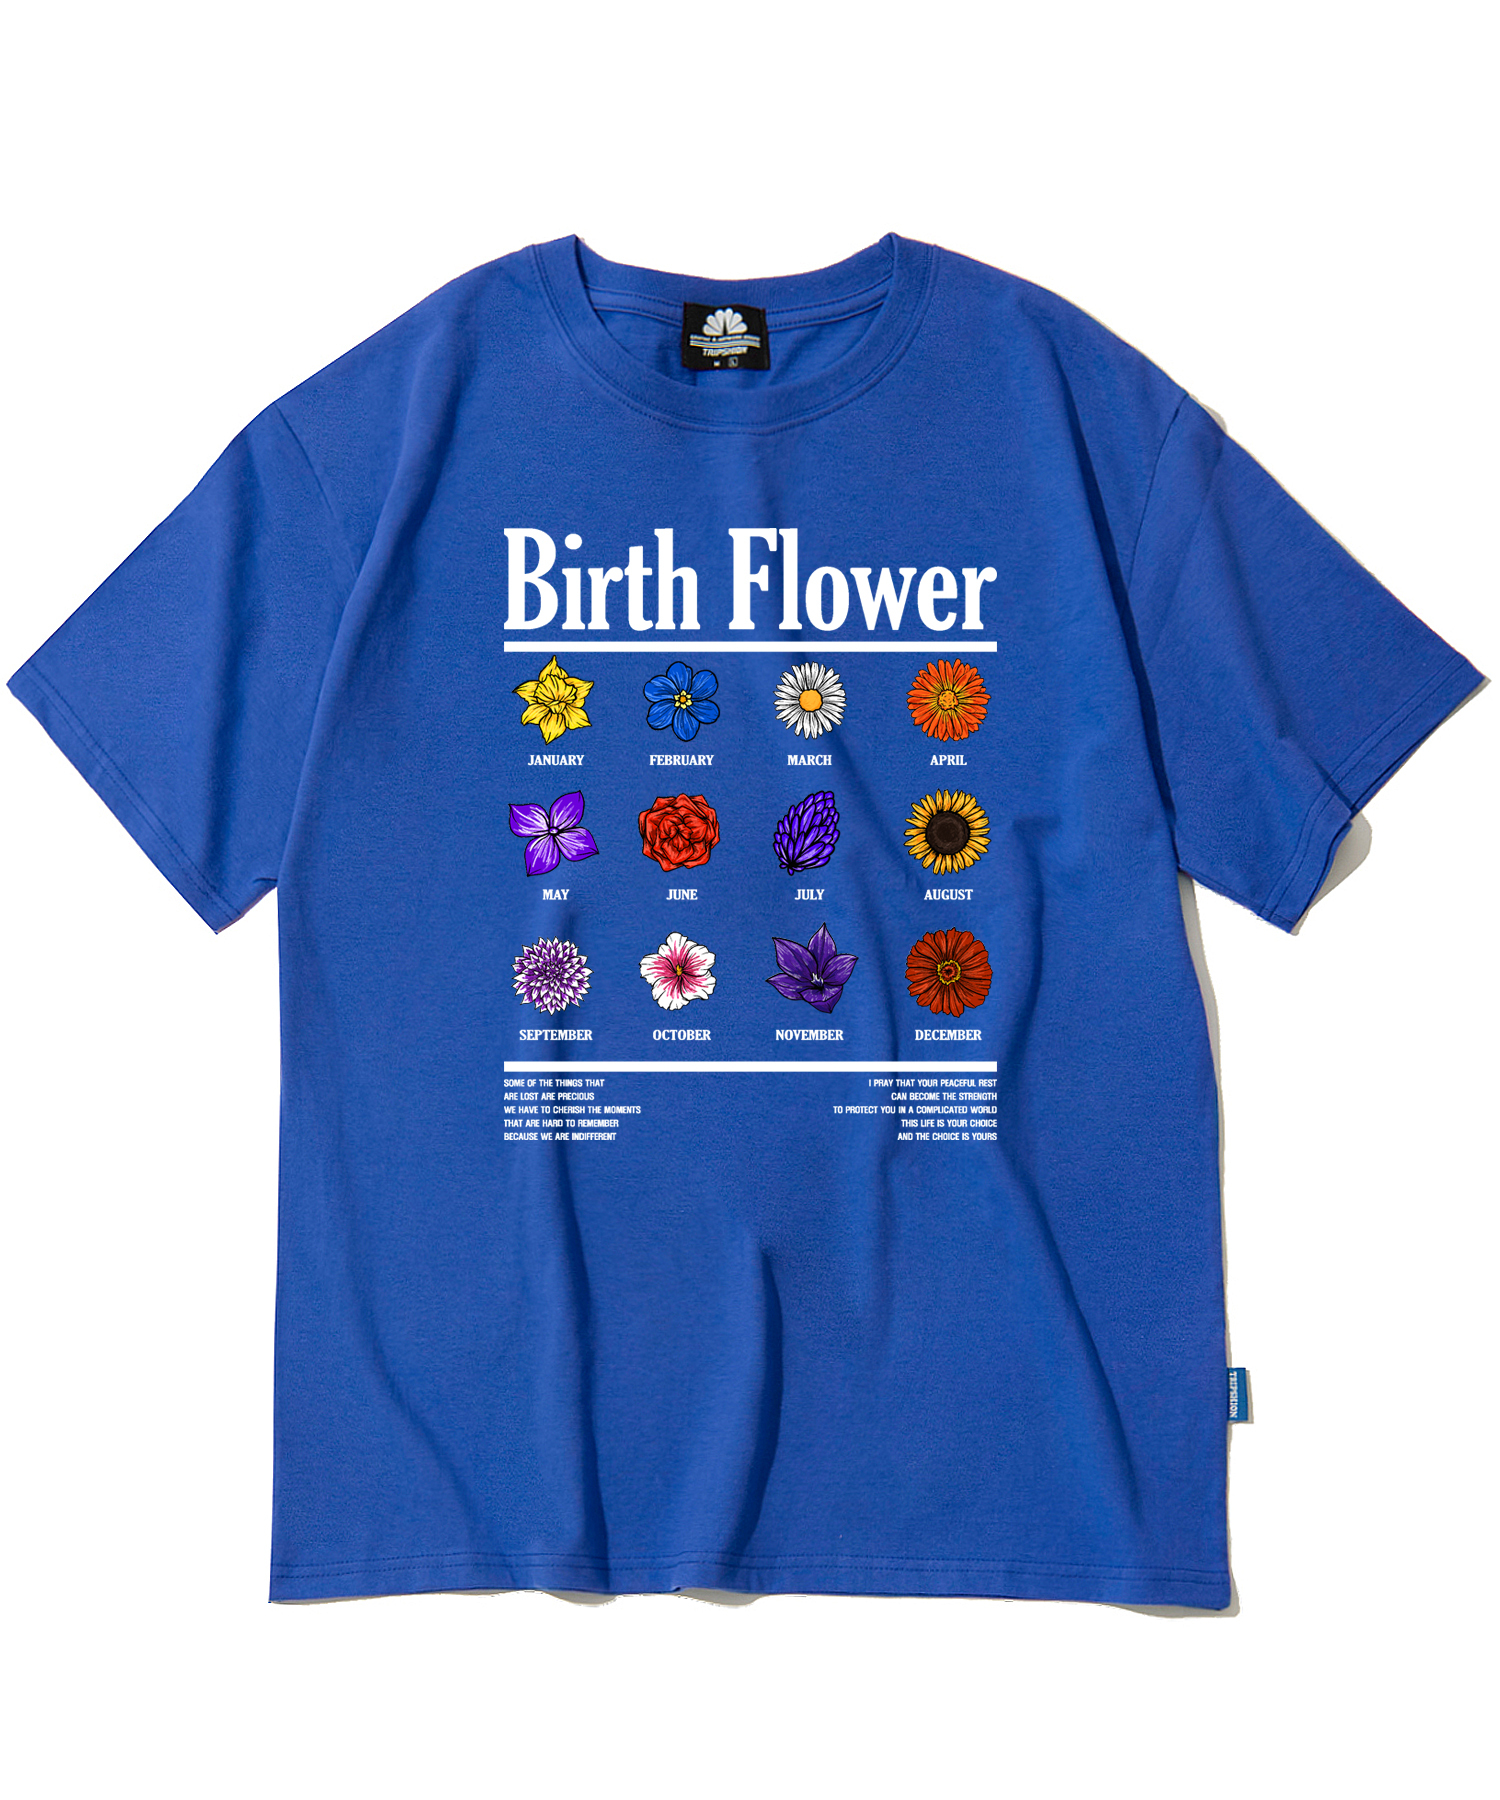 BIRTH FLOWER GRAPHIC T-SHIRTS - BLUE